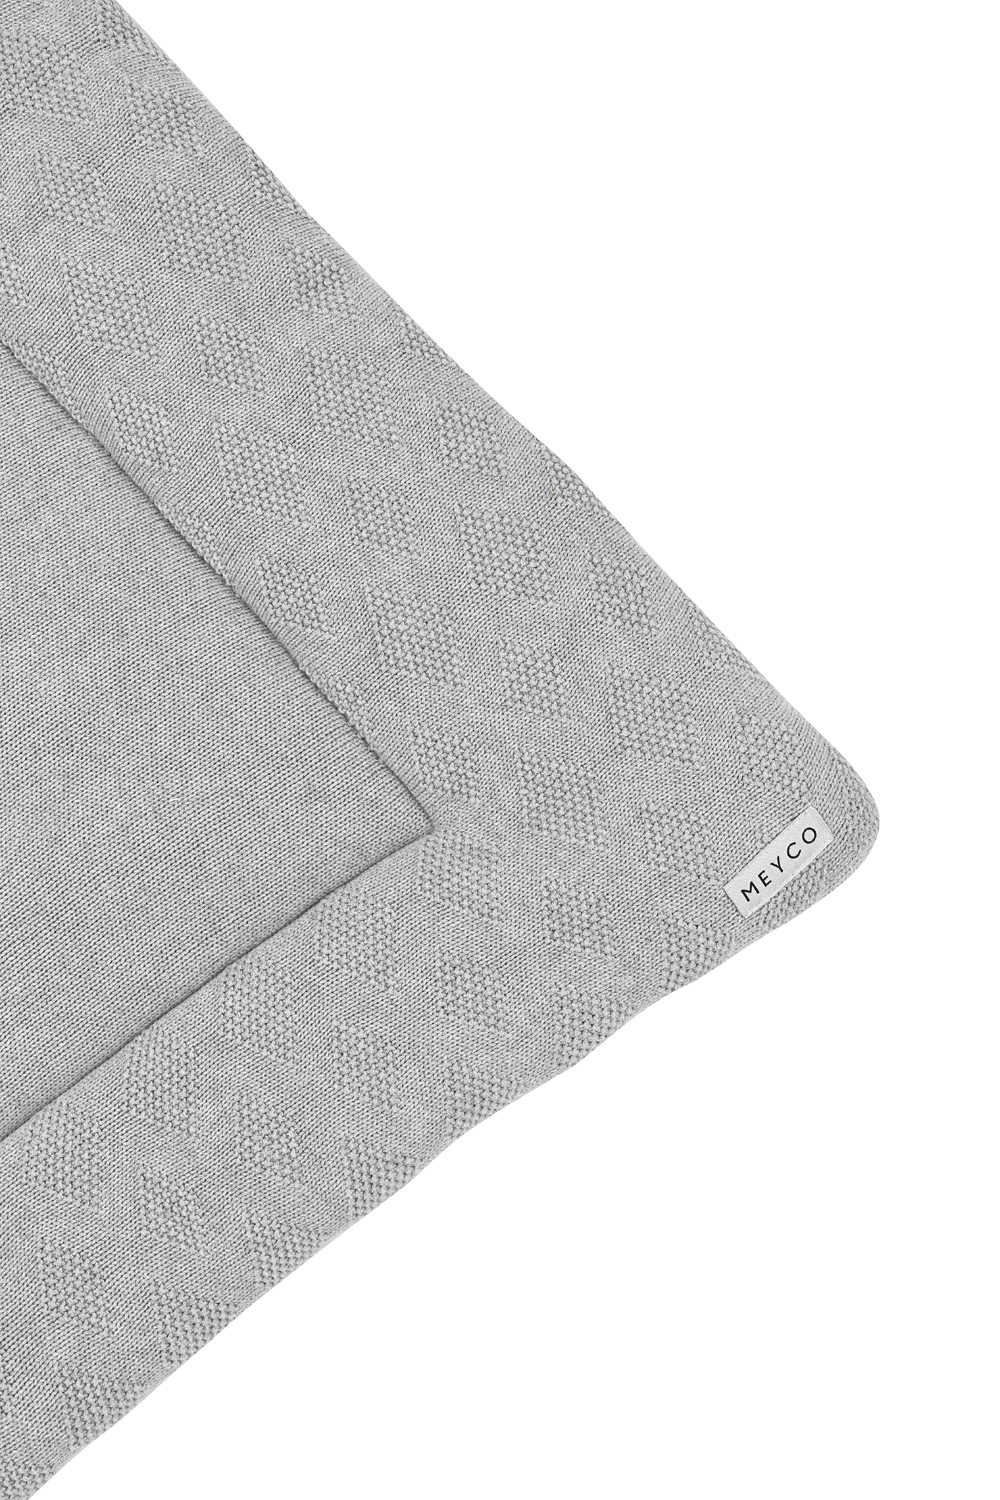 Playpen mattress biological Diamond - grey melange - 77x97cm